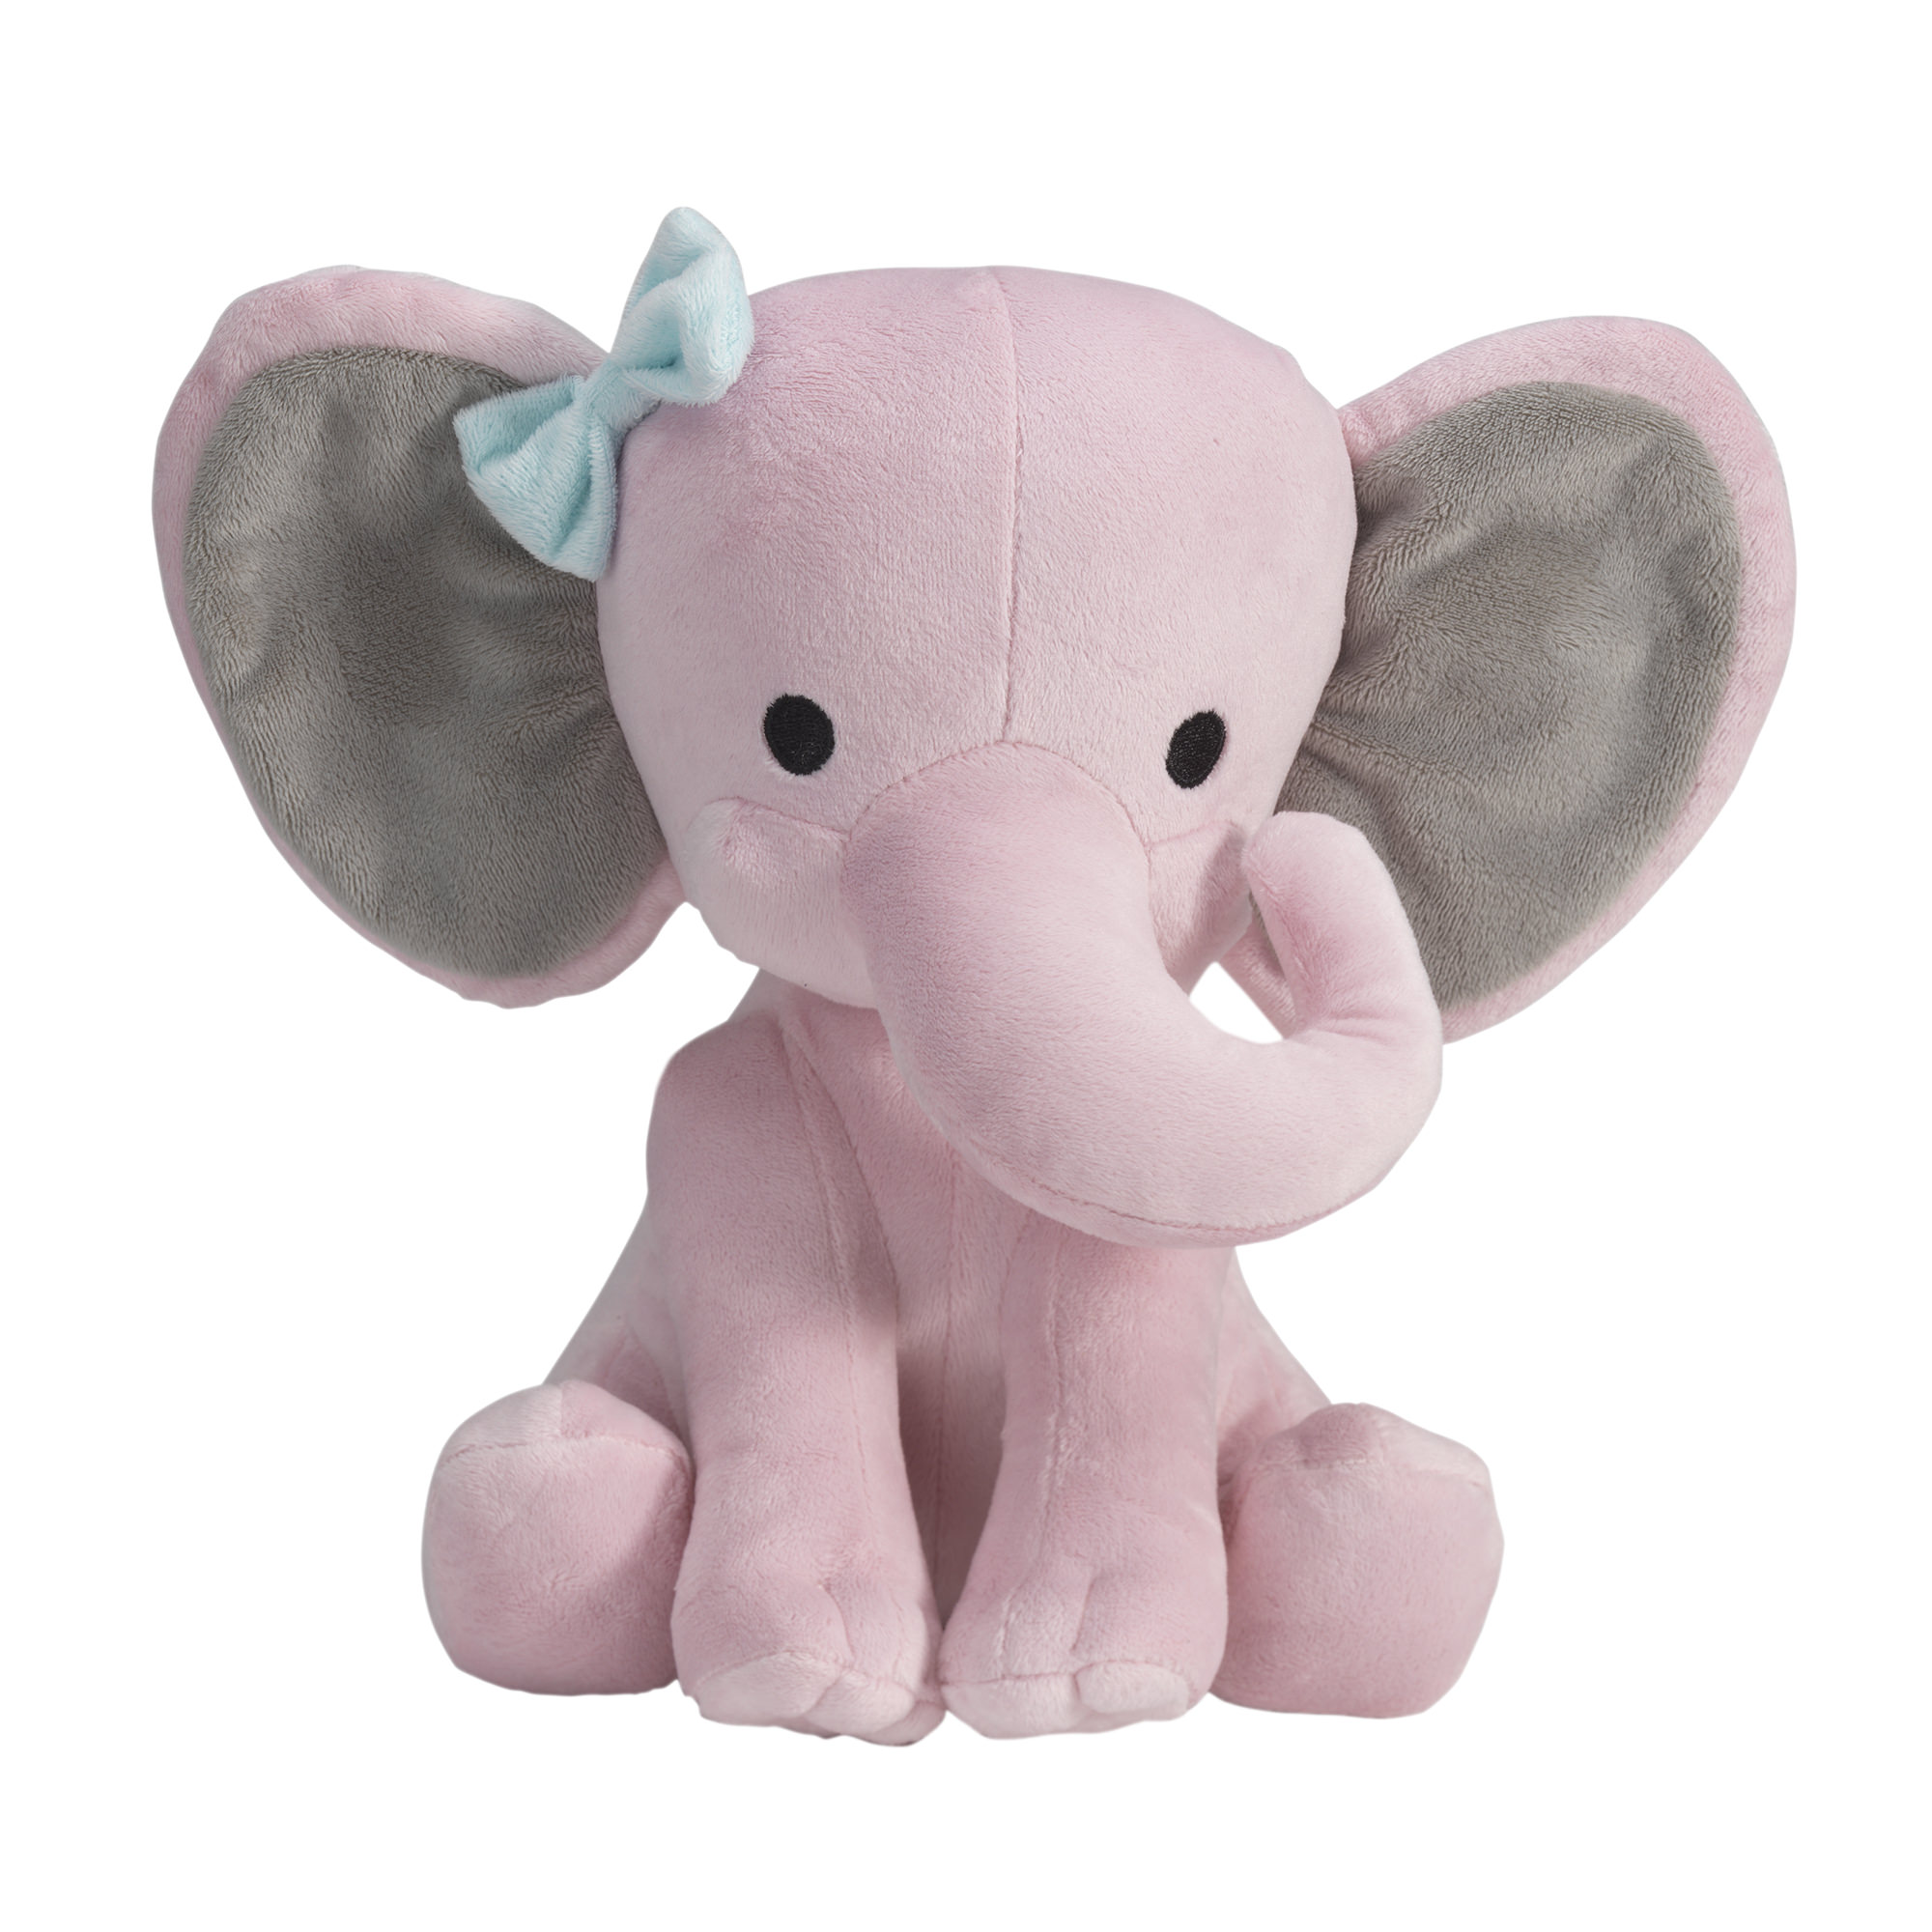 10" Bedtime Originals Twinkle Toes Pink Elephant Plush (hazel) $4.30 + Free Shipping w/ Walmart+ or on $35+